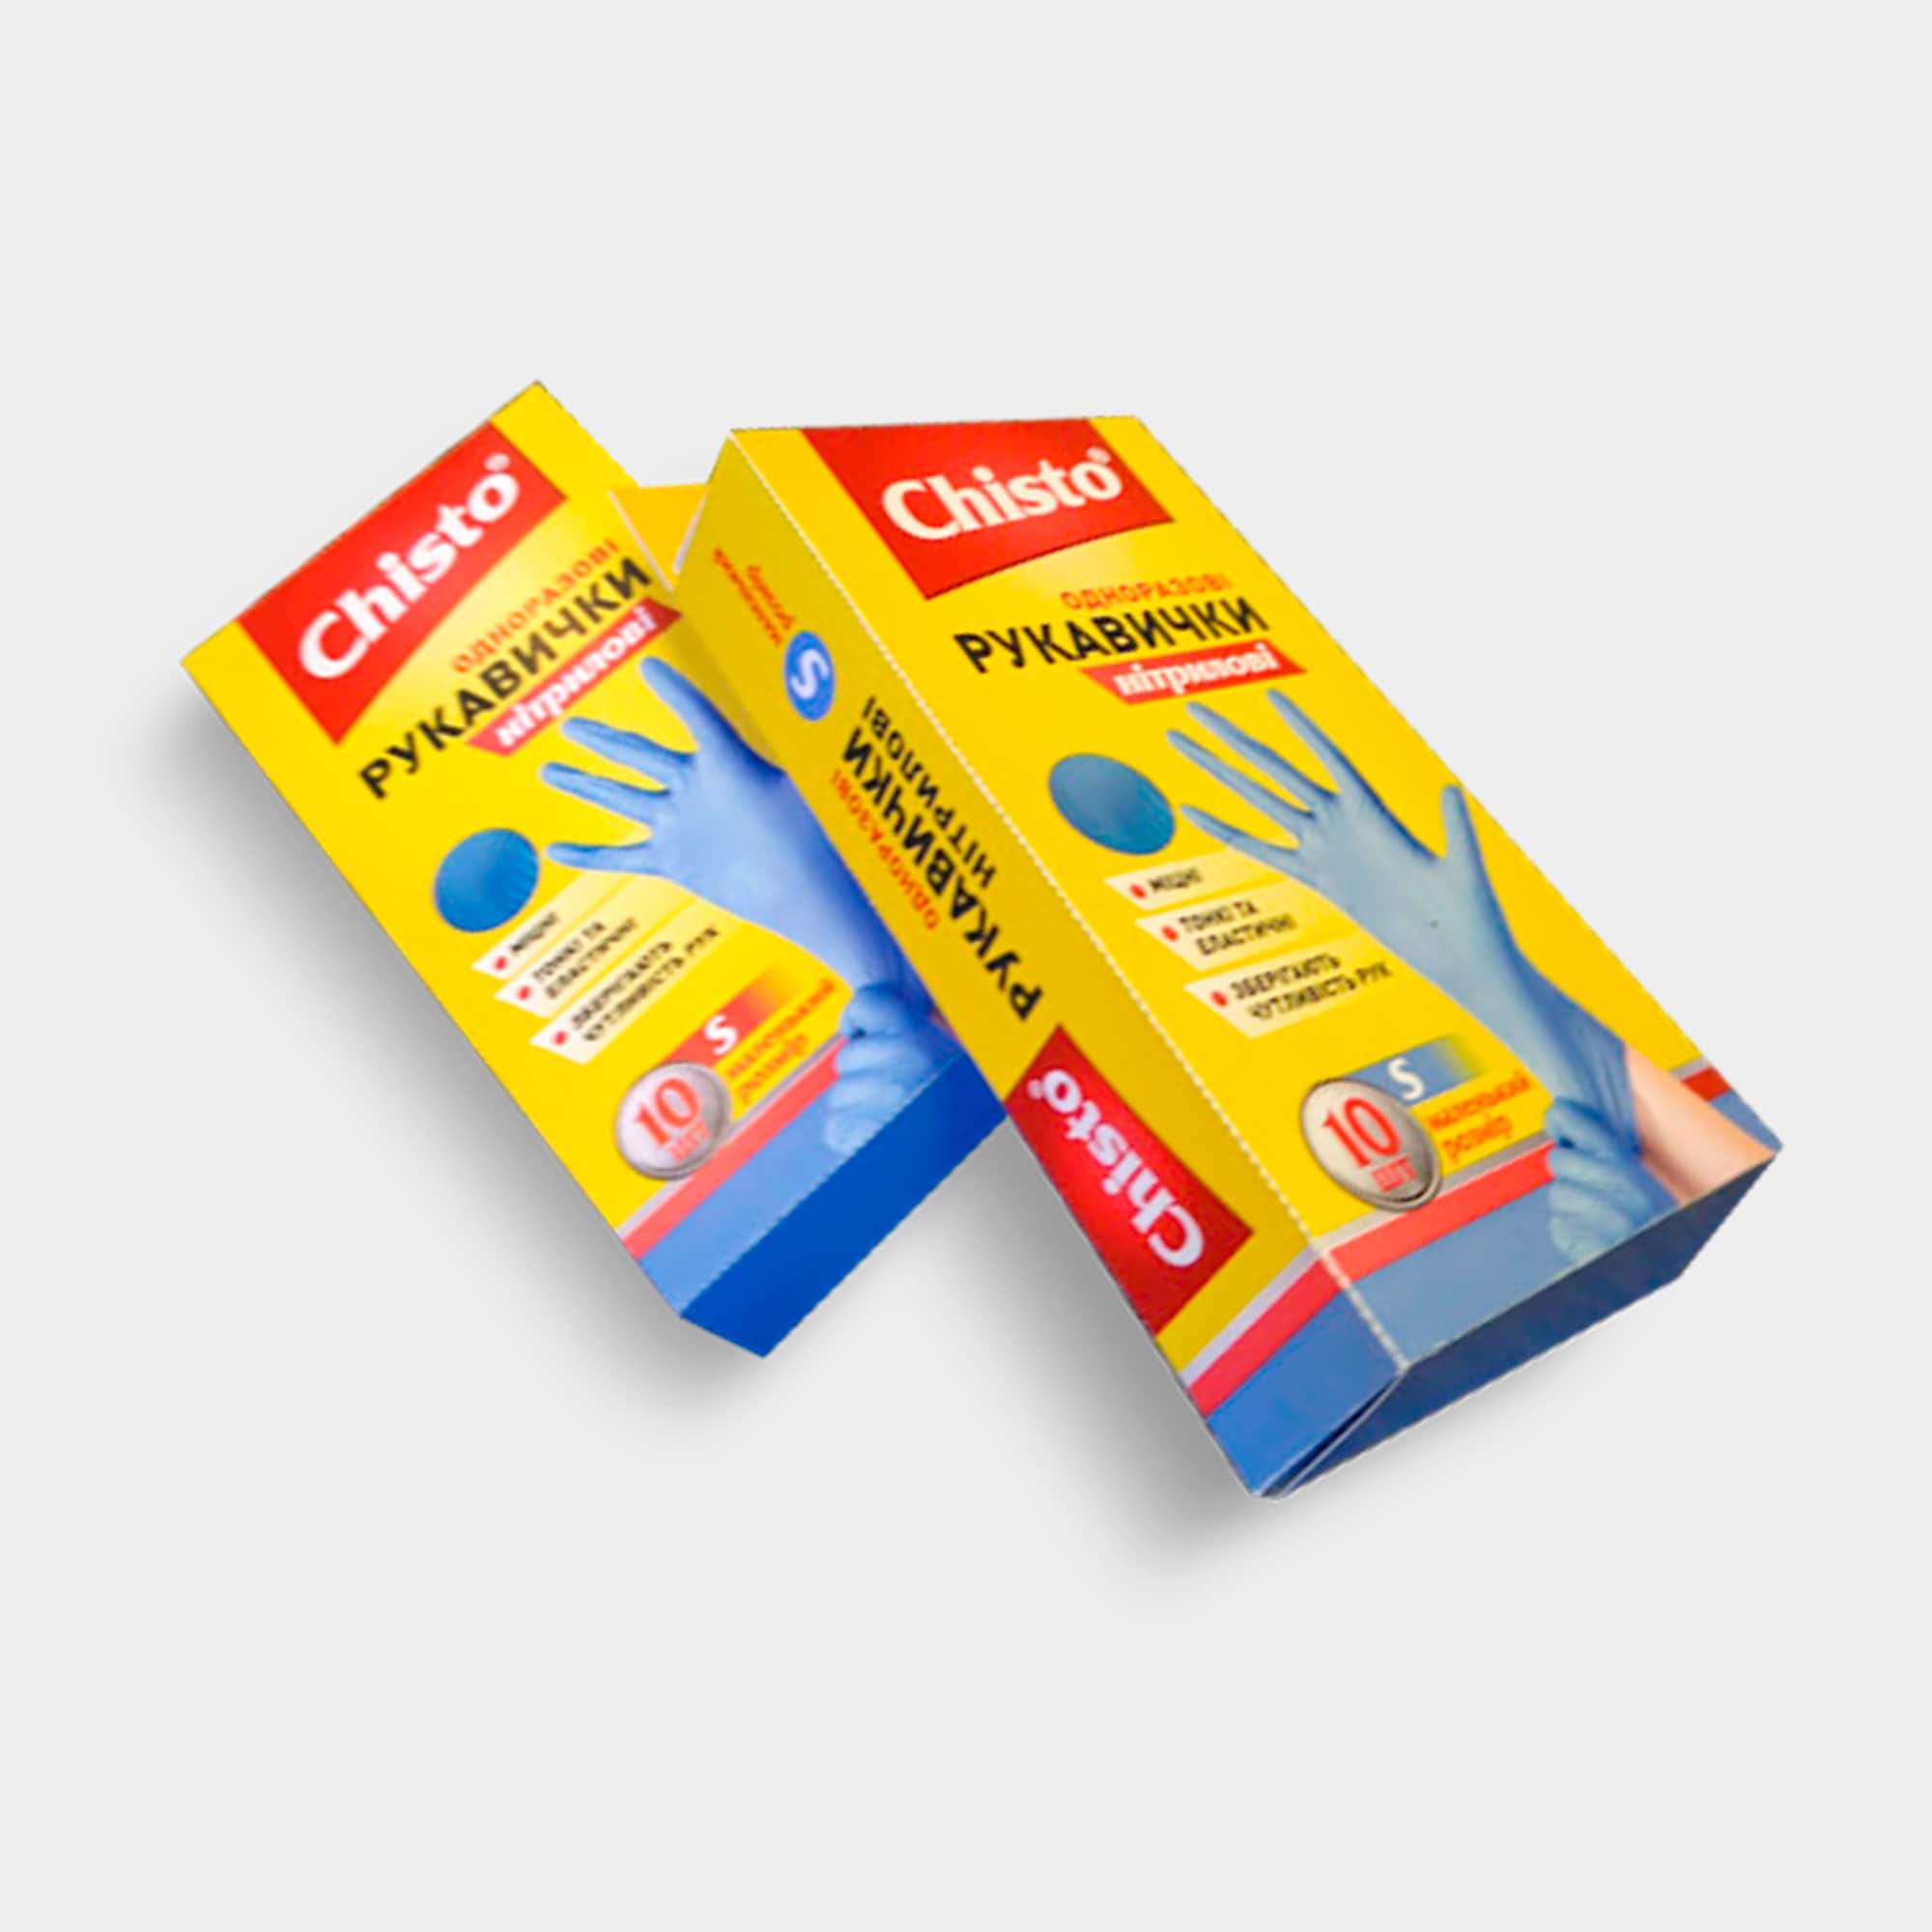 Перчатки нитриловые одноразовые ТМ «Chisto», 10 шт. | продукция ТМ Chisto